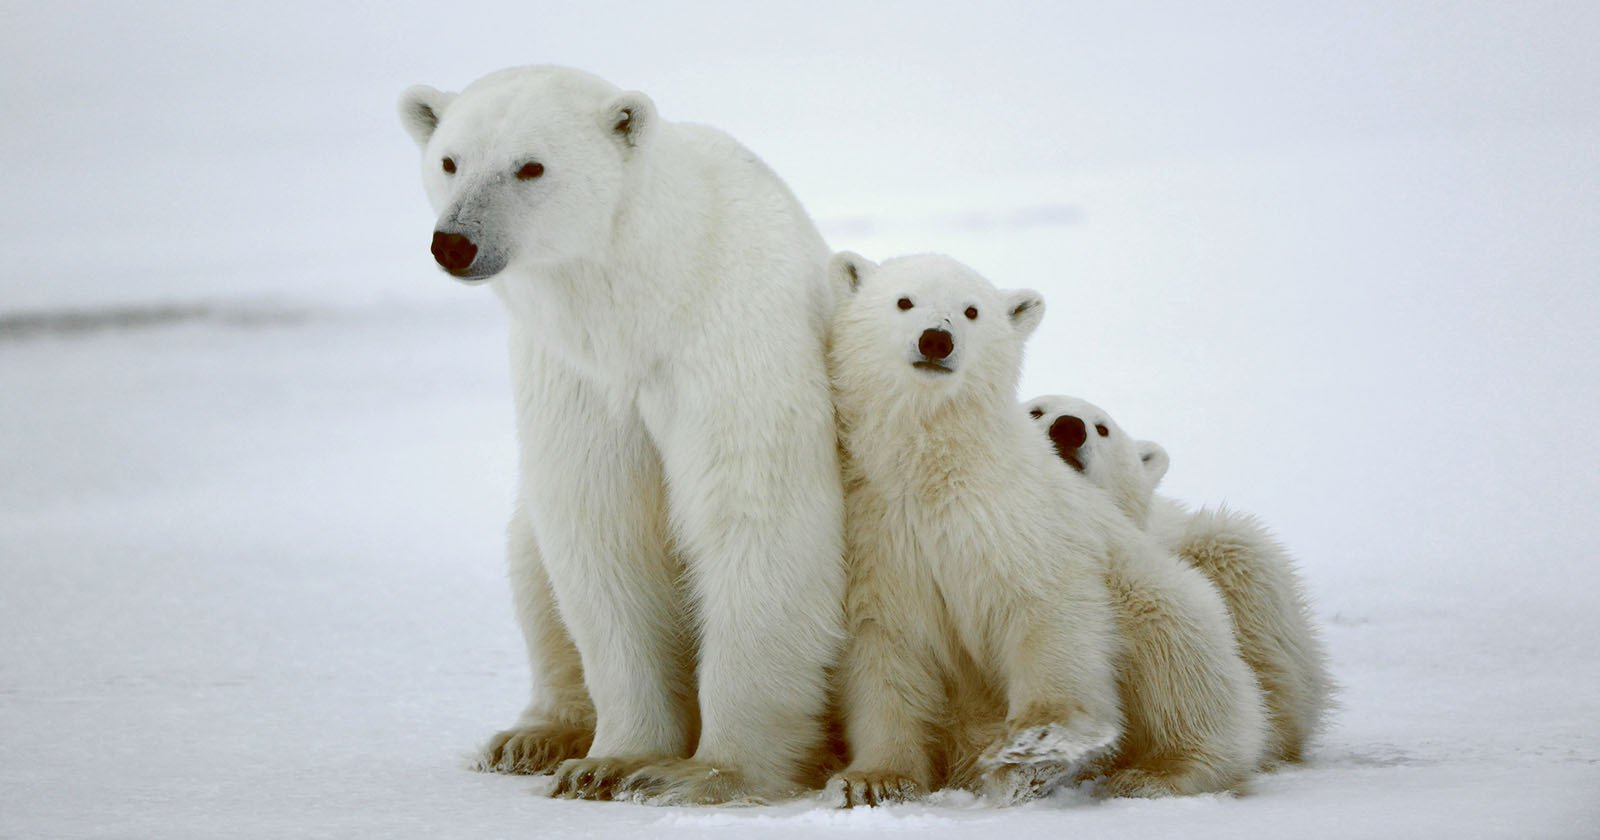  polar bear photos are losing their power climate 